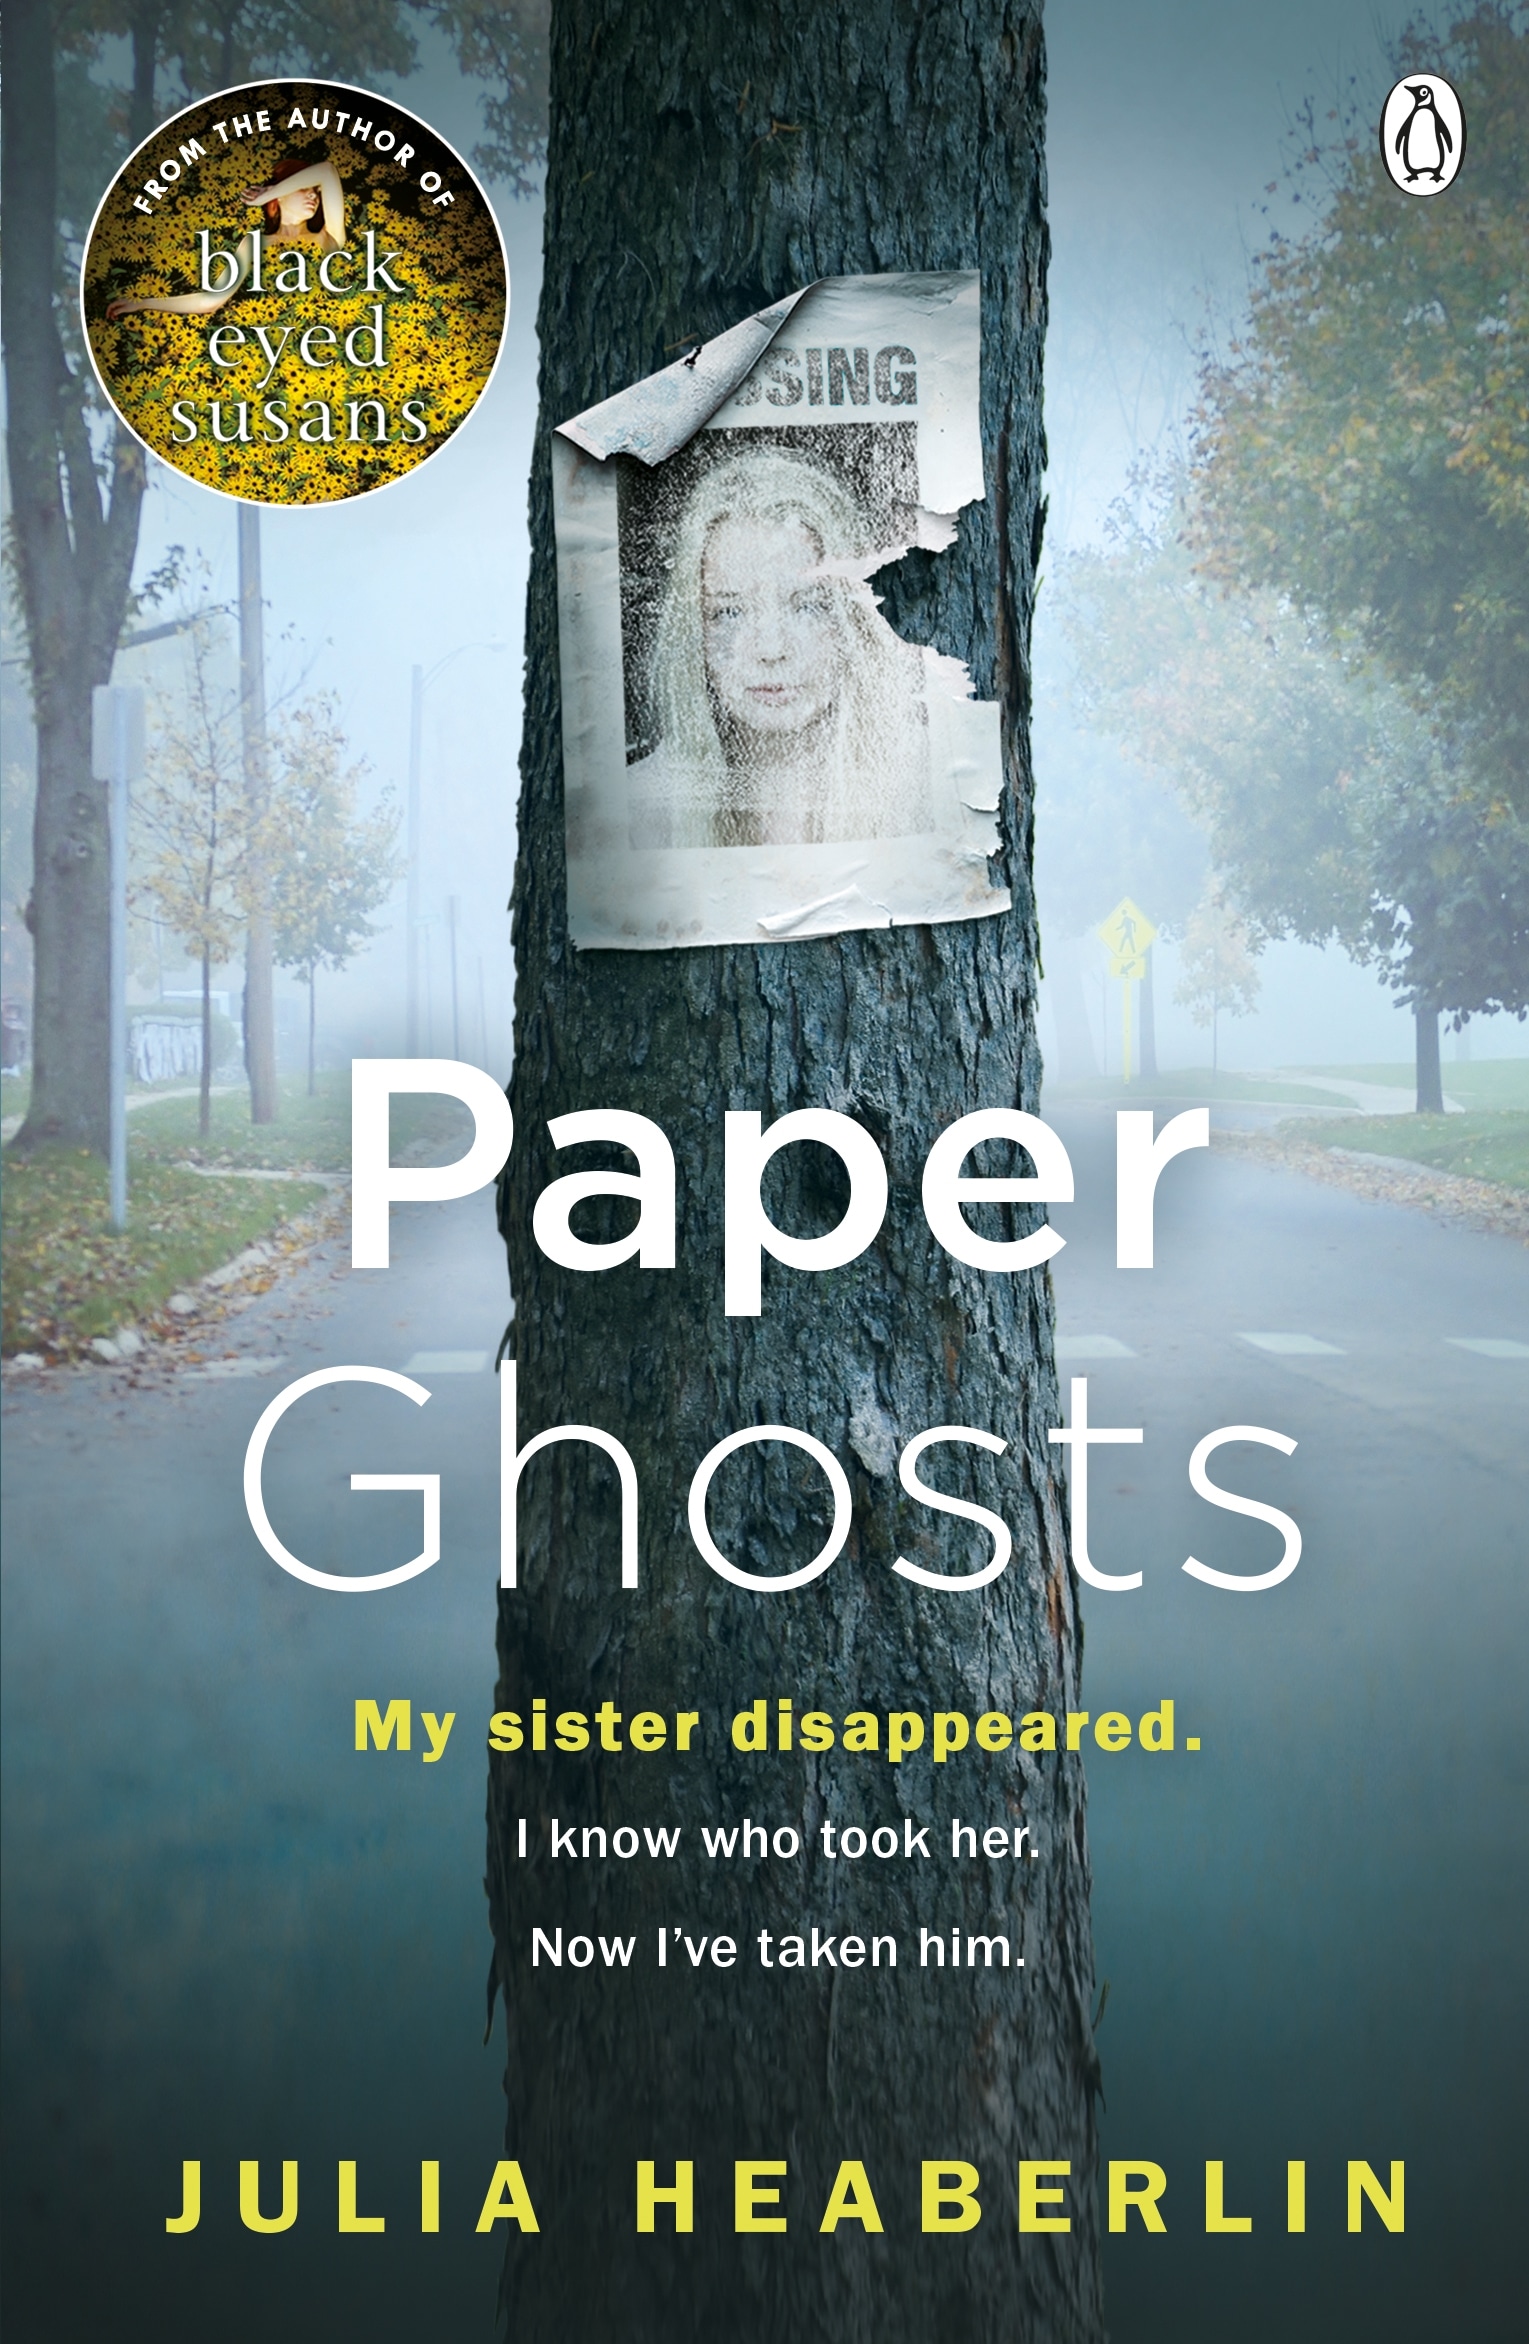 Book “Paper Ghosts” by Julia Heaberlin — September 6, 2018